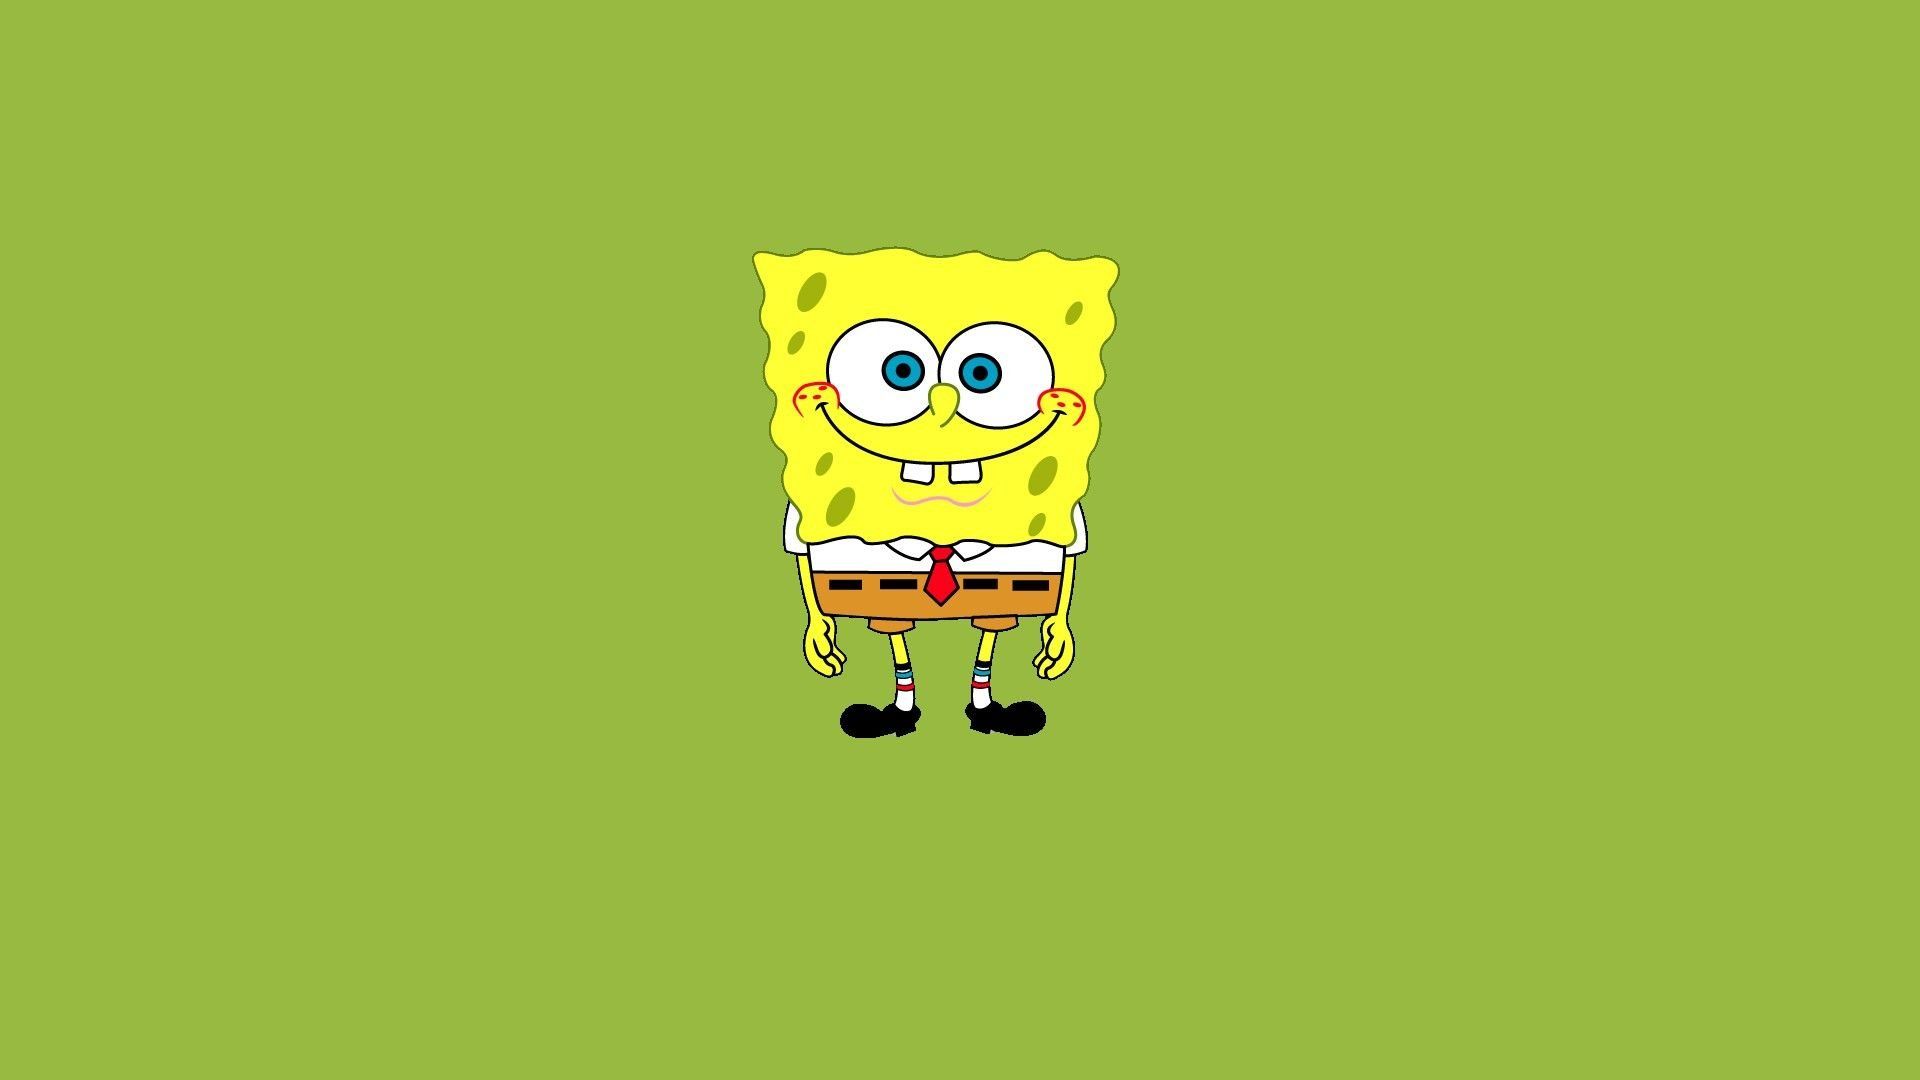 Spongebob squarepants wallpaper hd - SpongeBob